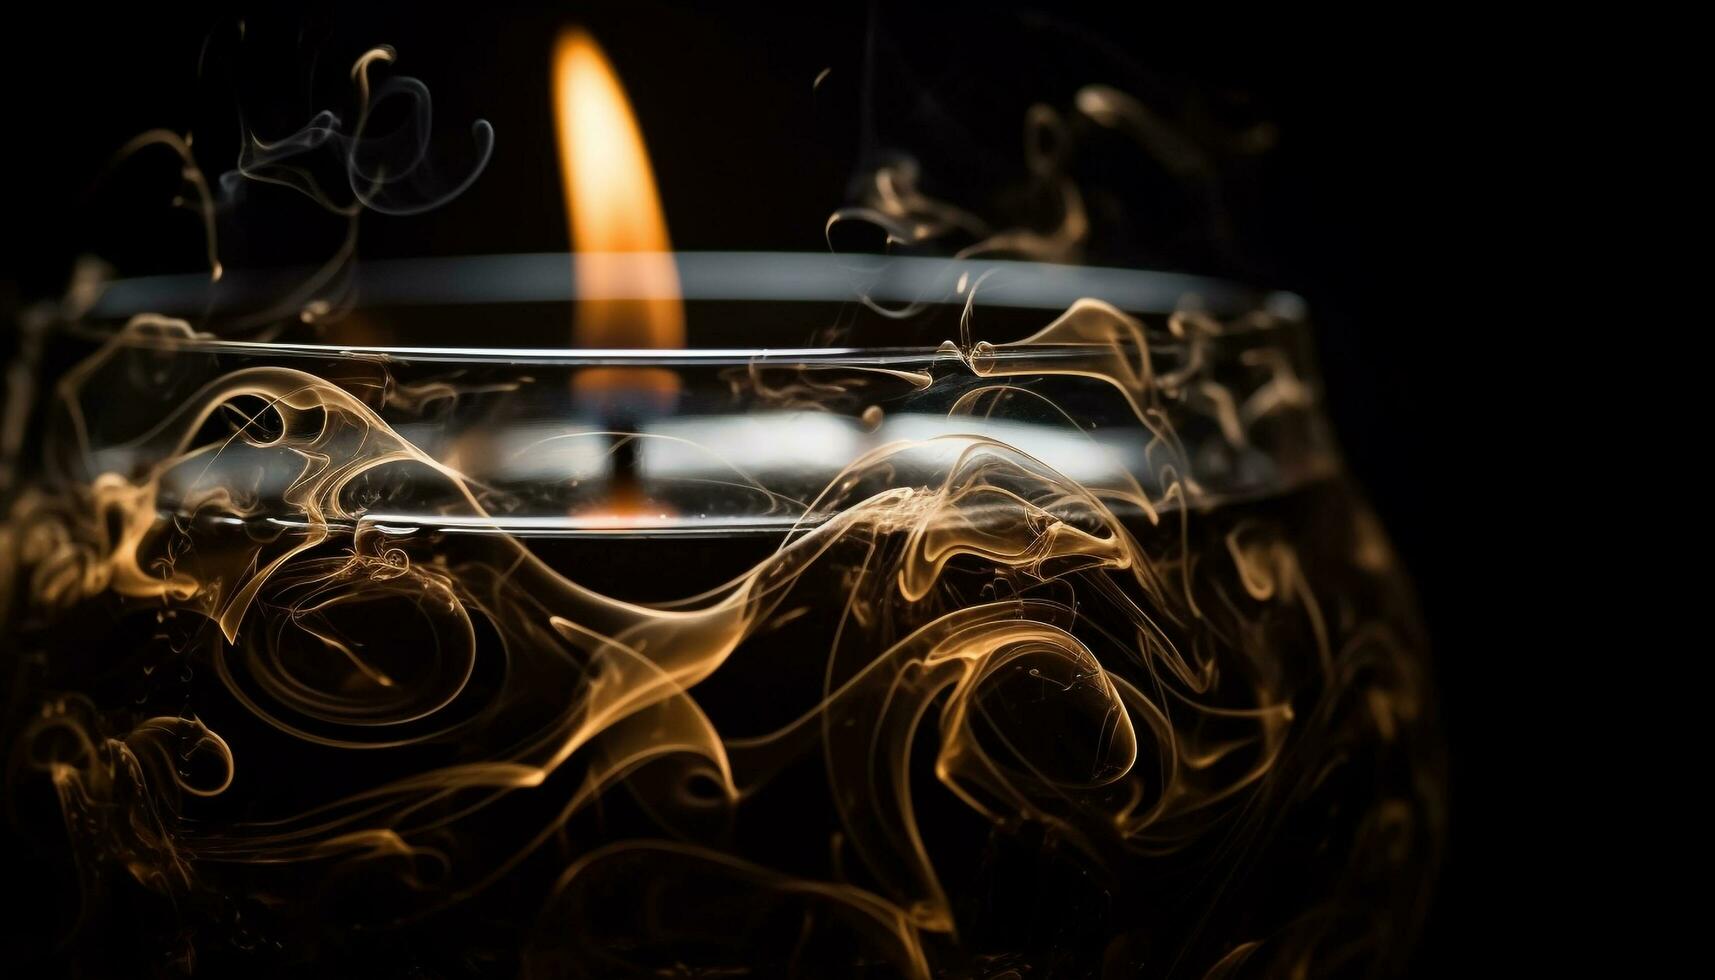 Luxury whiskey in candlelight reflects elegant celebration generated by AI photo